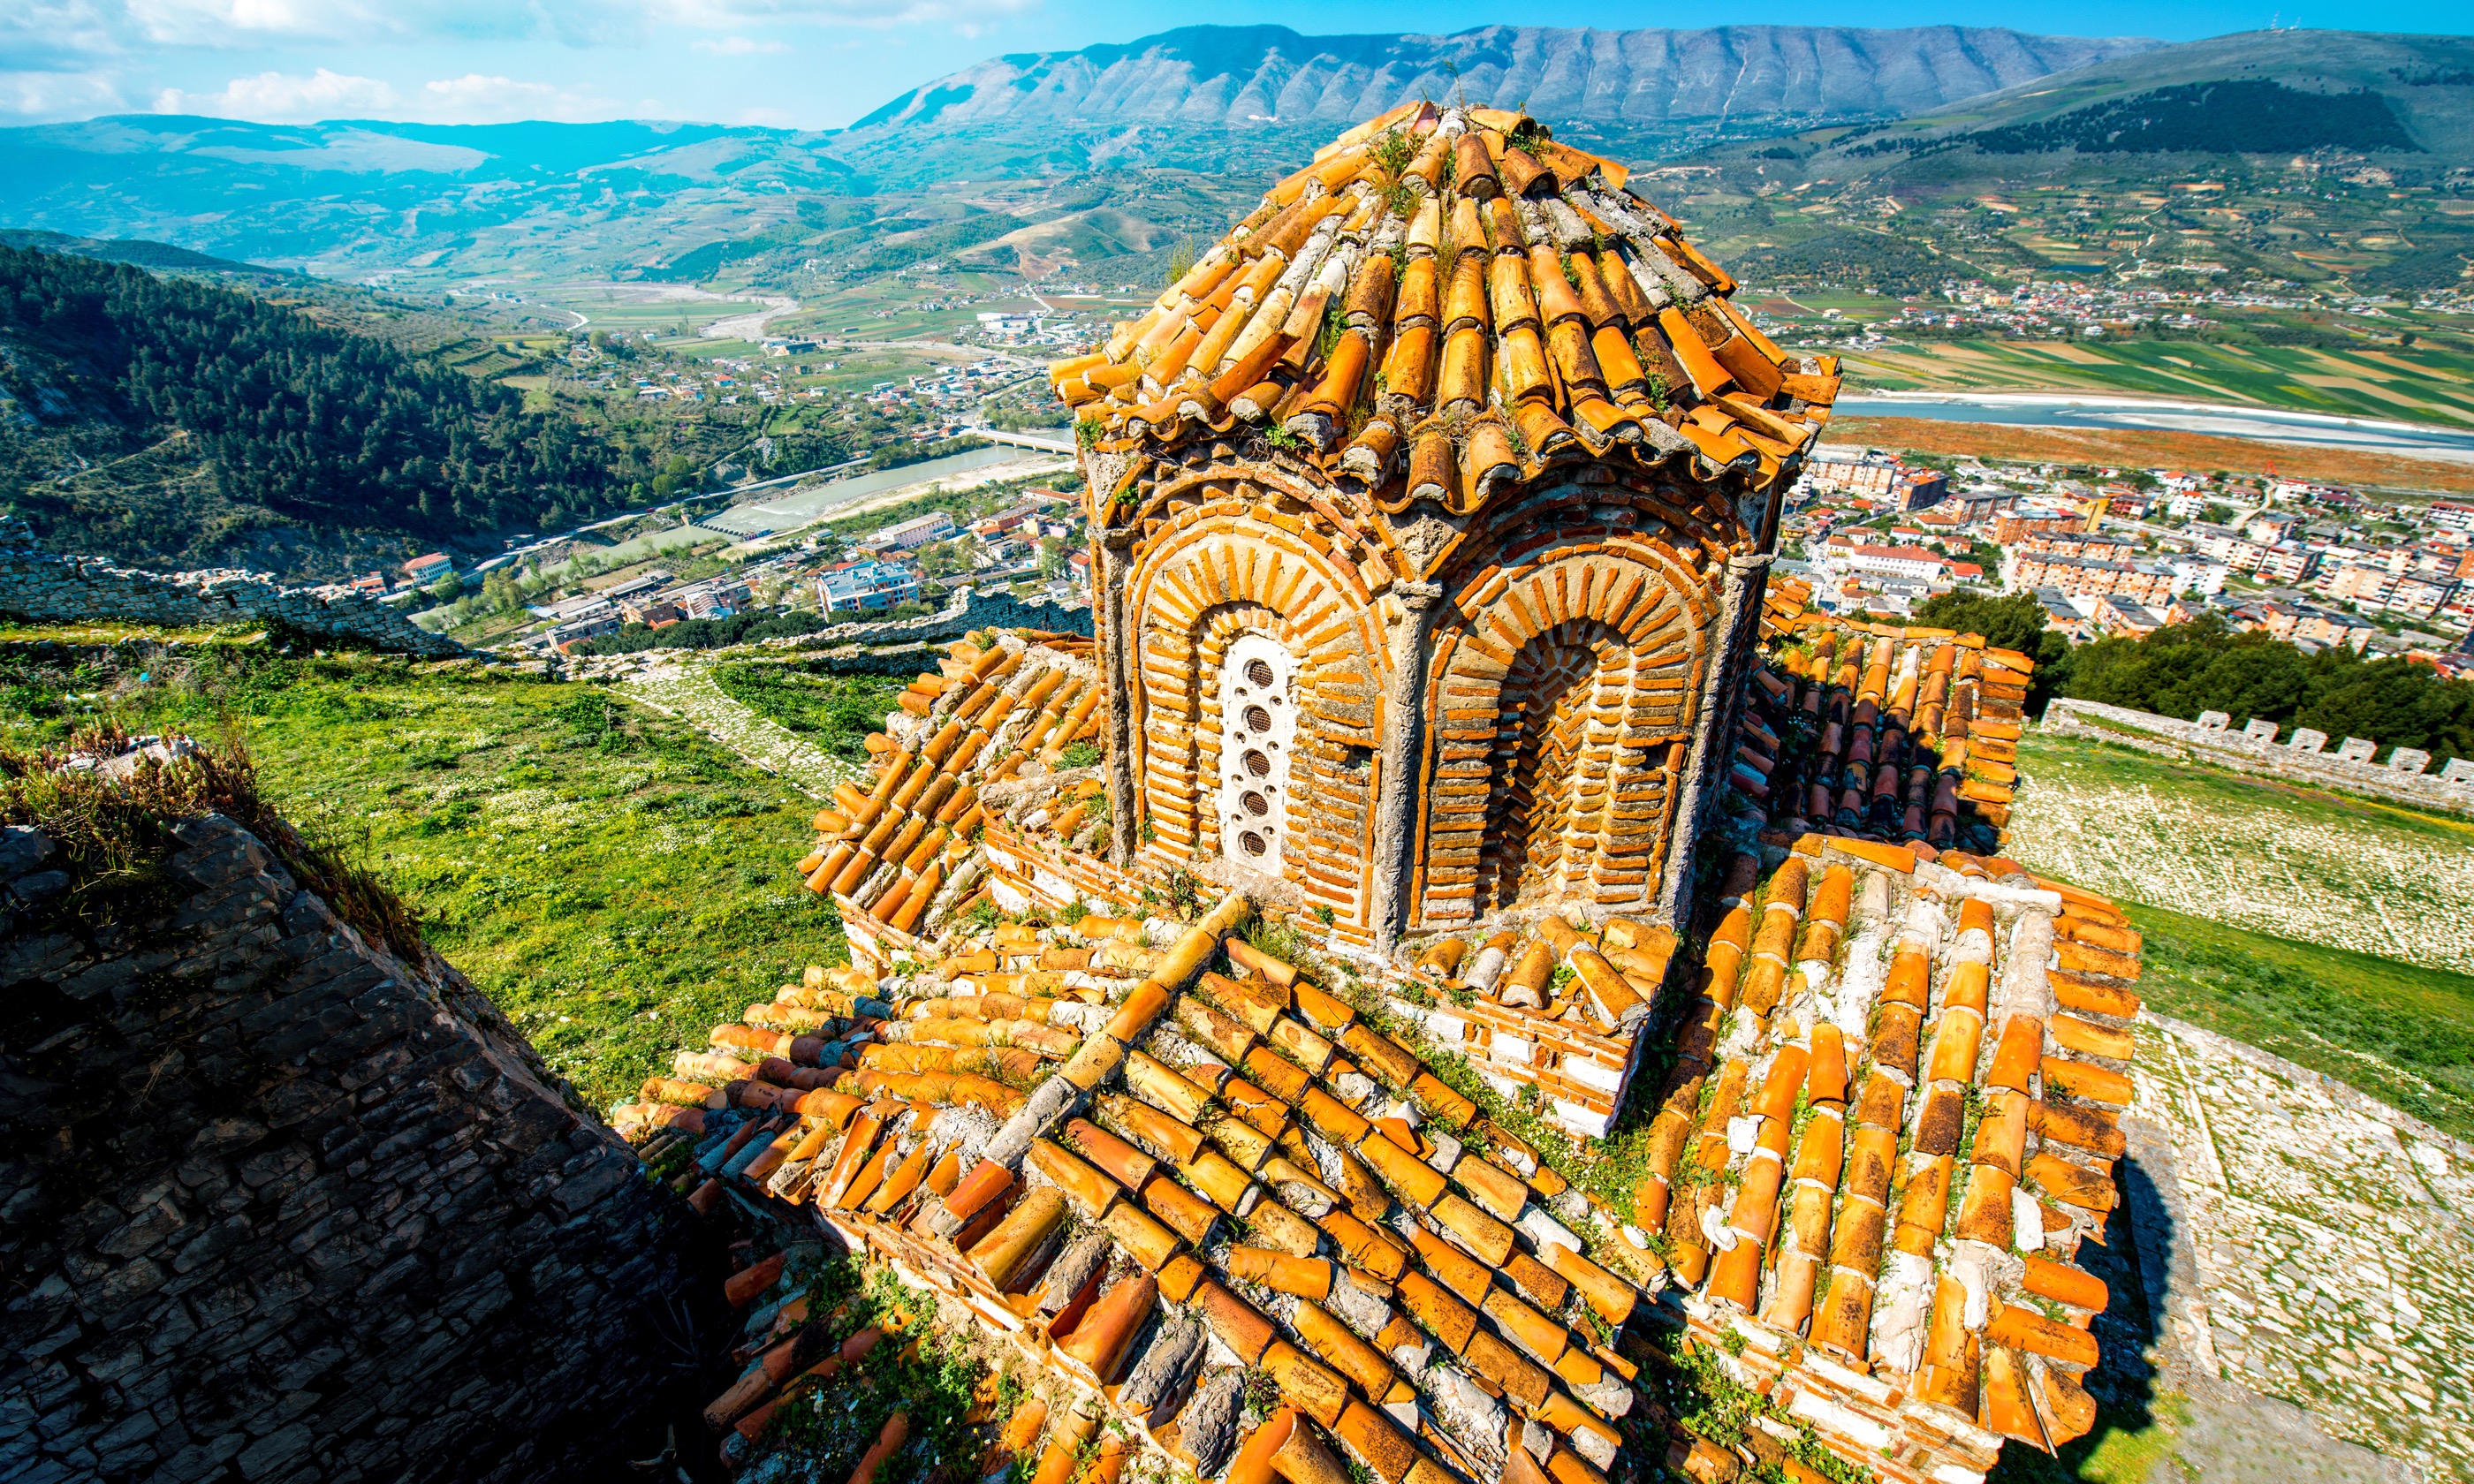 St. Theodores church in Berat city, Albania (Shutterstock.com)